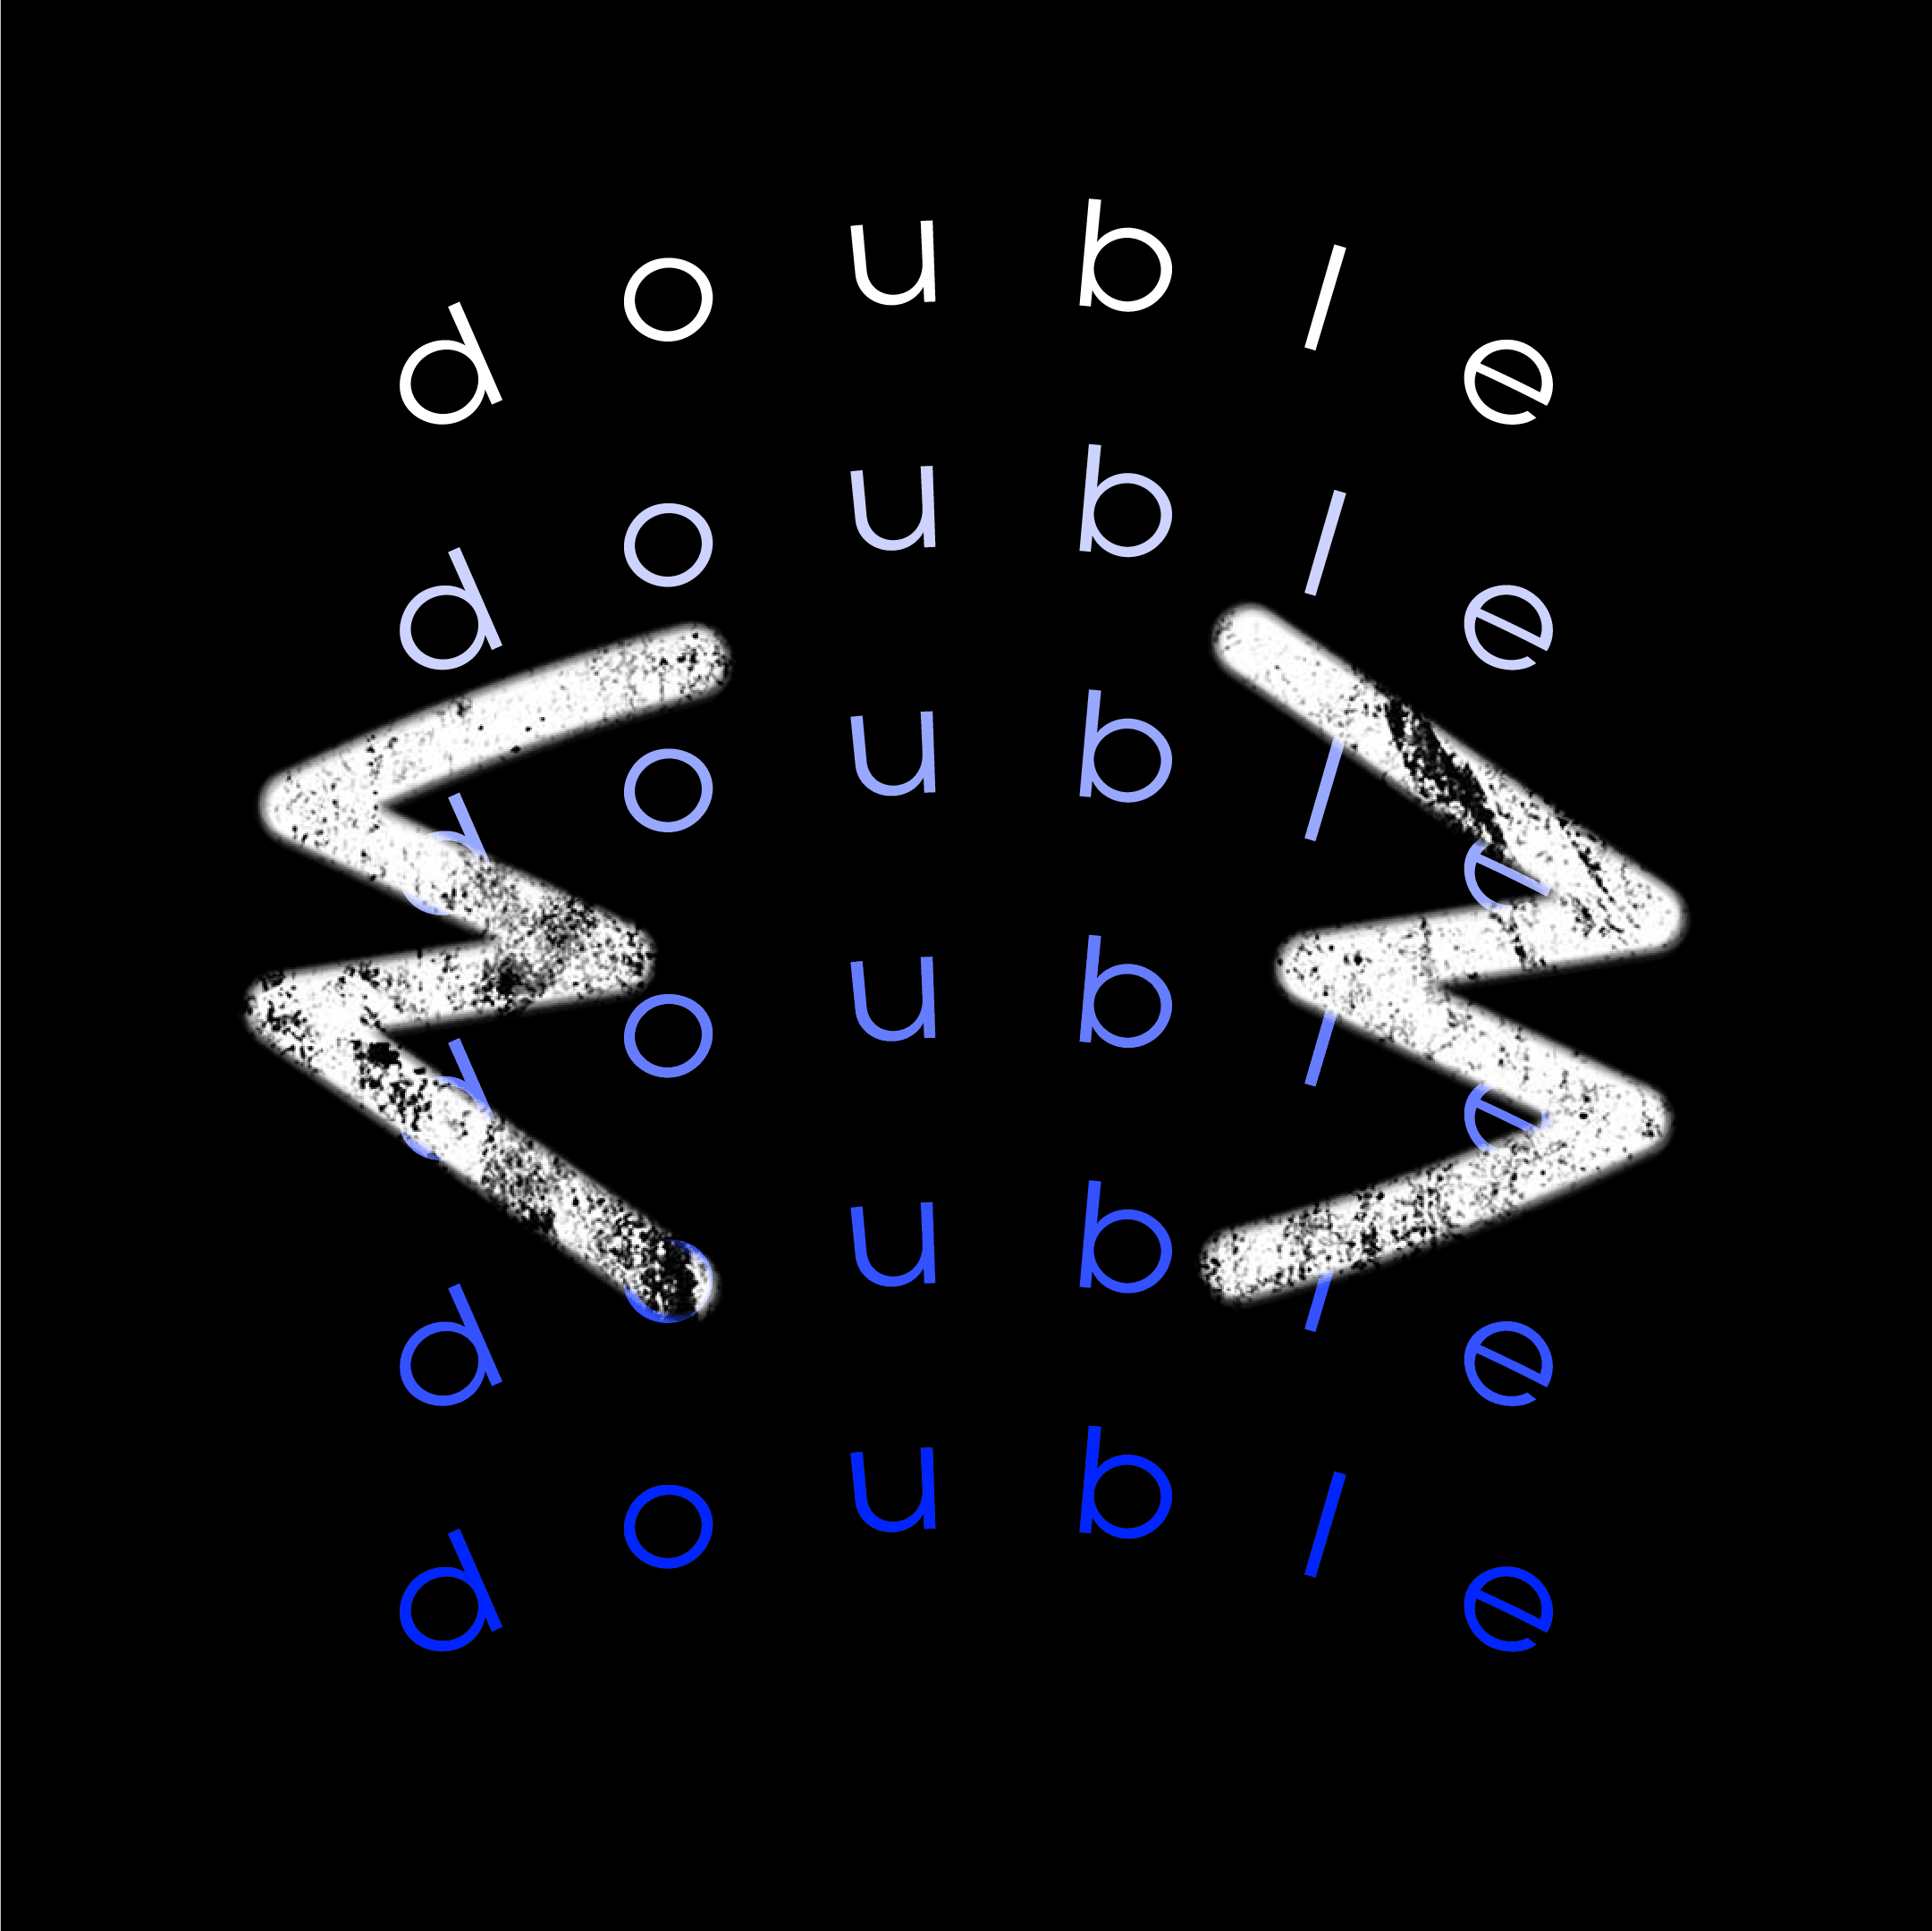 Double_e